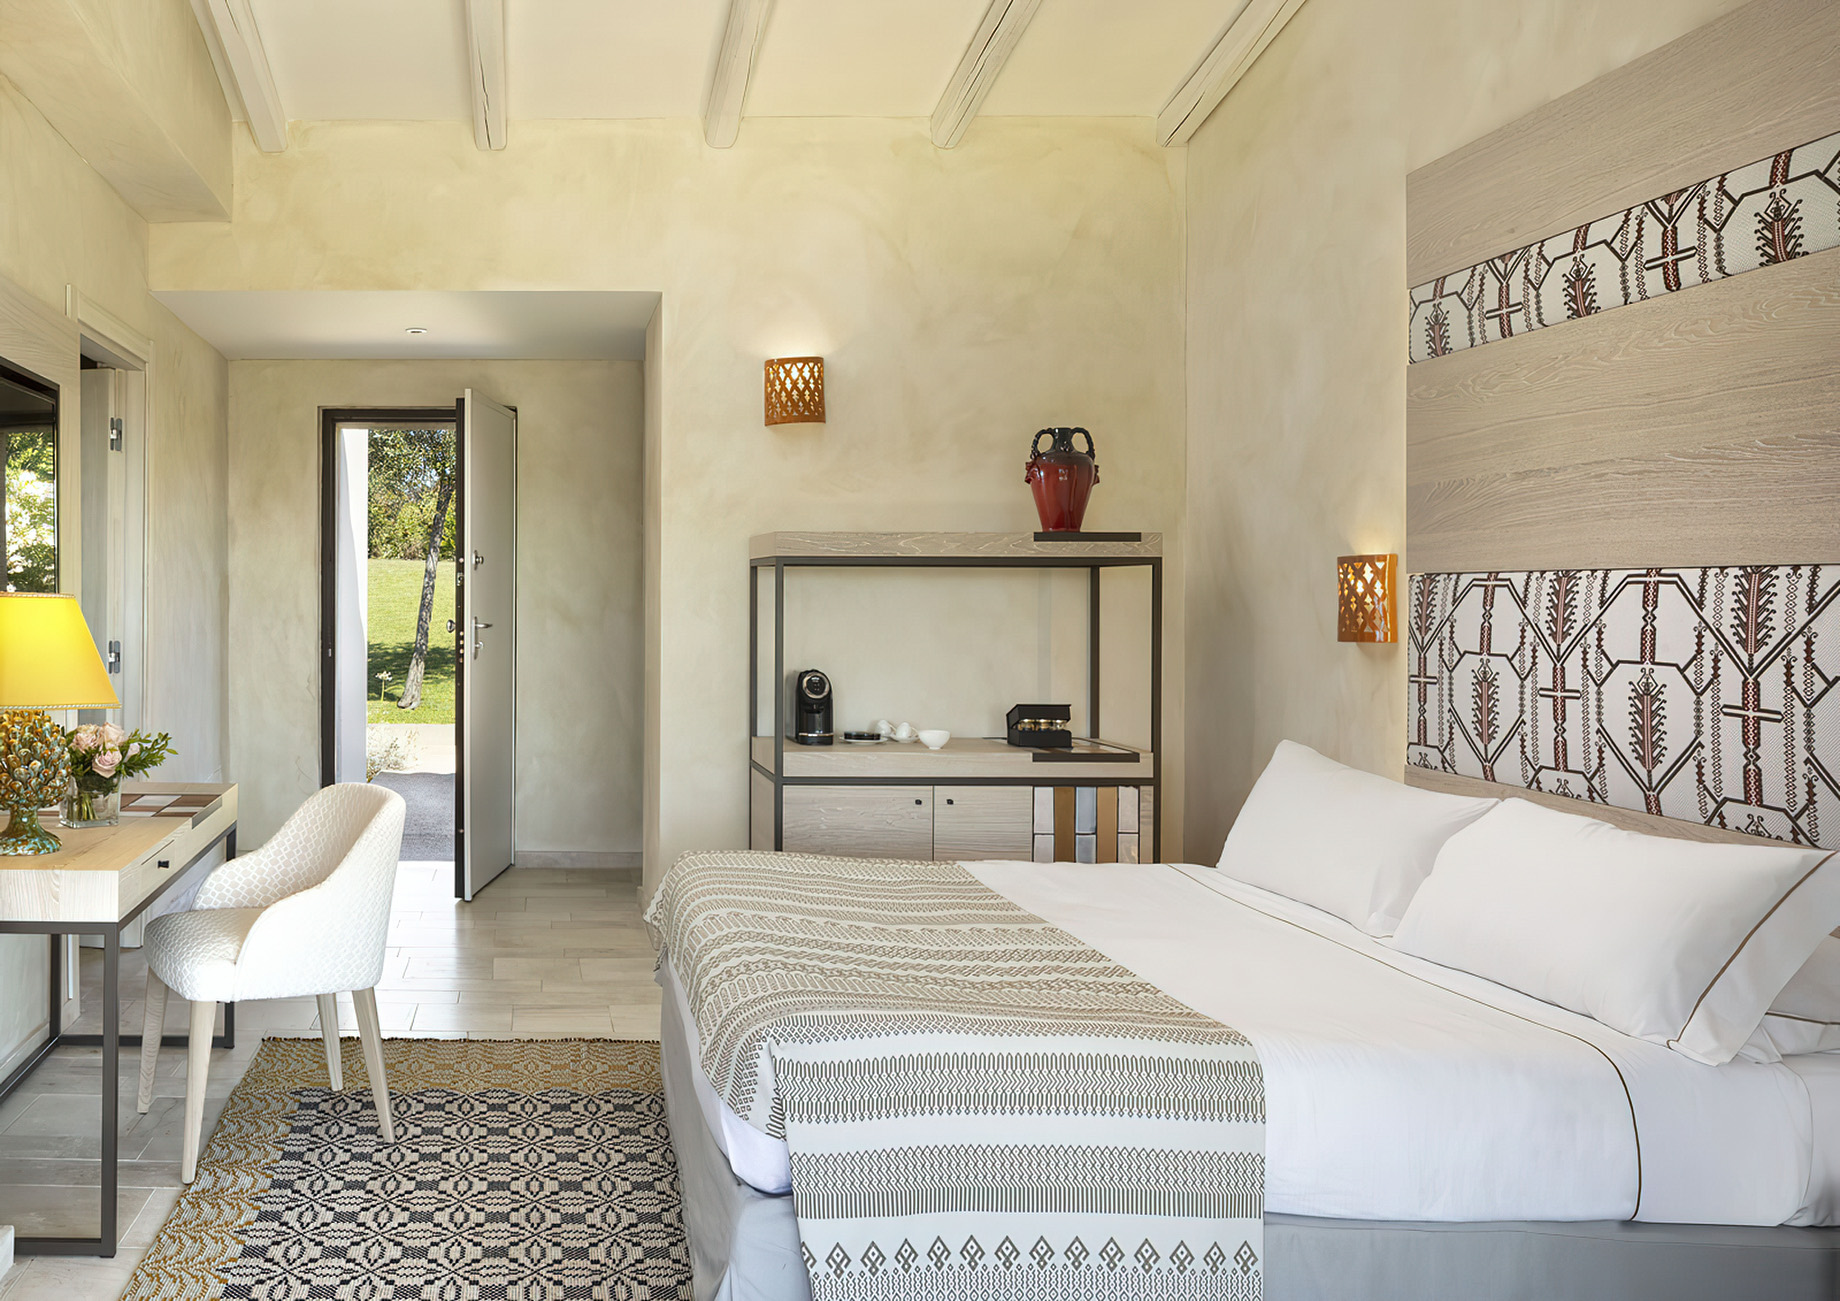 Baglioni Resort Sardinia – San Teodoro, Sardegna, Italy – Grand Deluxe Room Interior